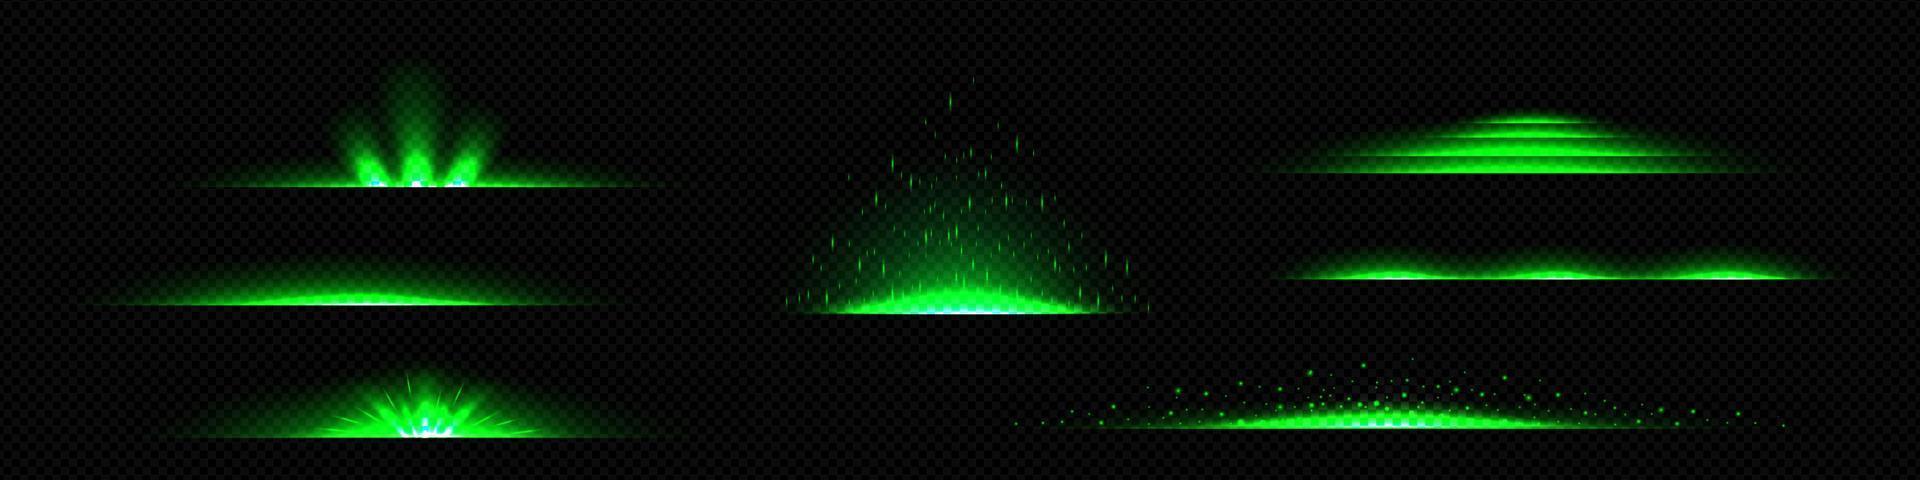 conjunto realista de divisores de línea de luz verde neón vector